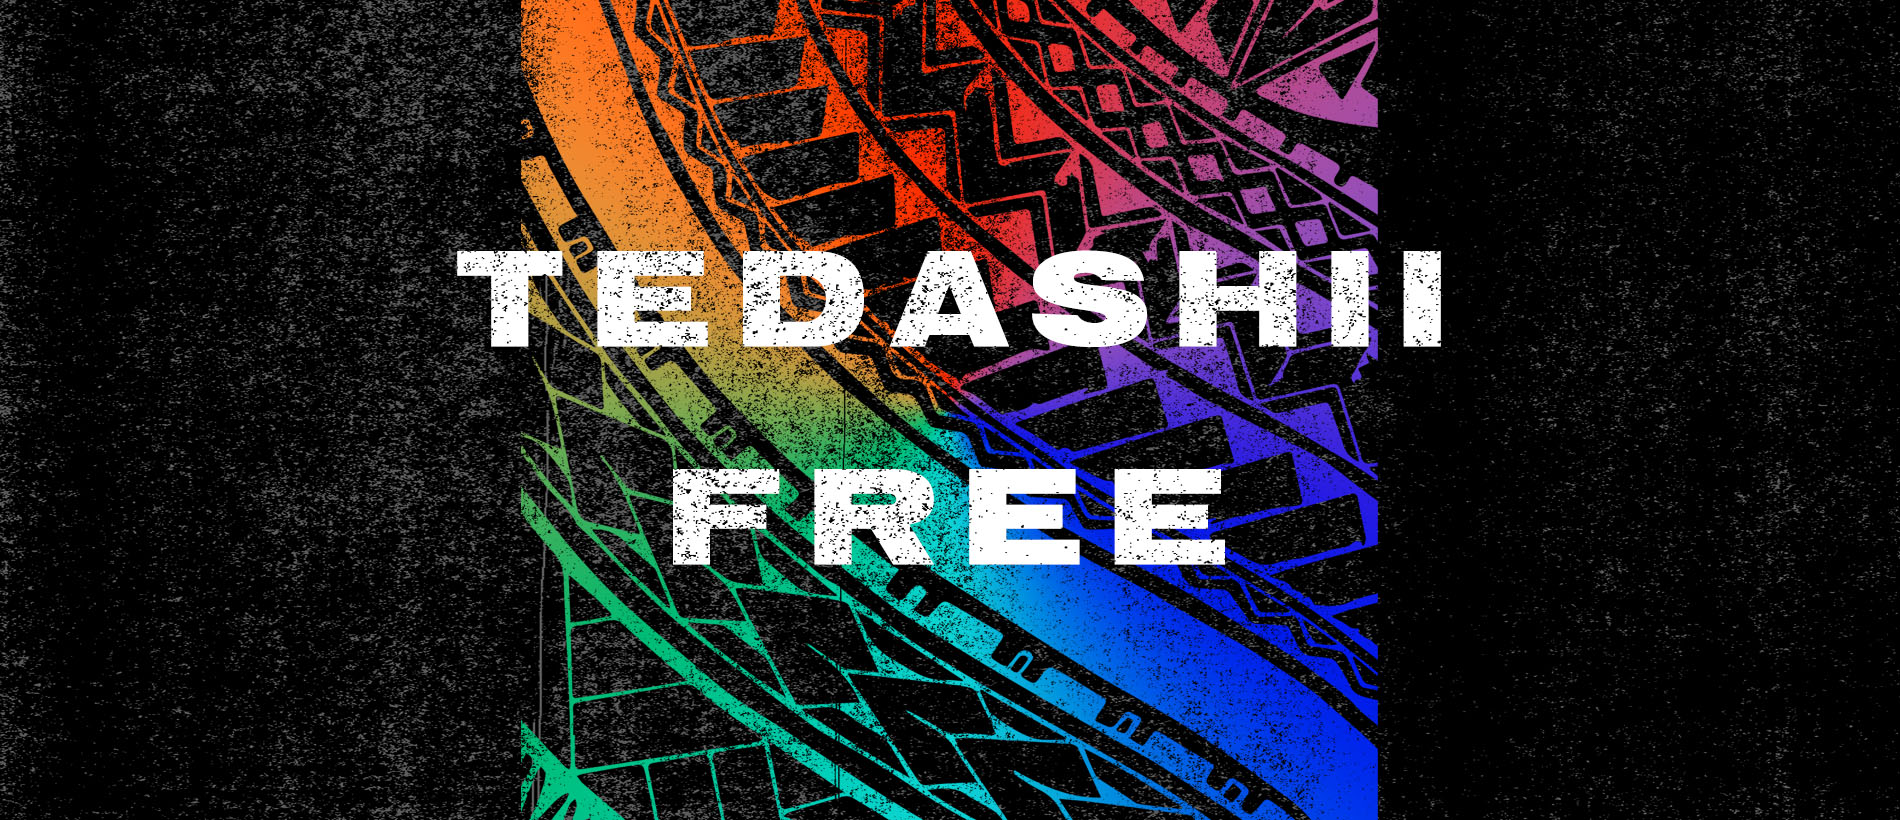 TEDASHII KICKS OFF 2017 WITH “FREE”